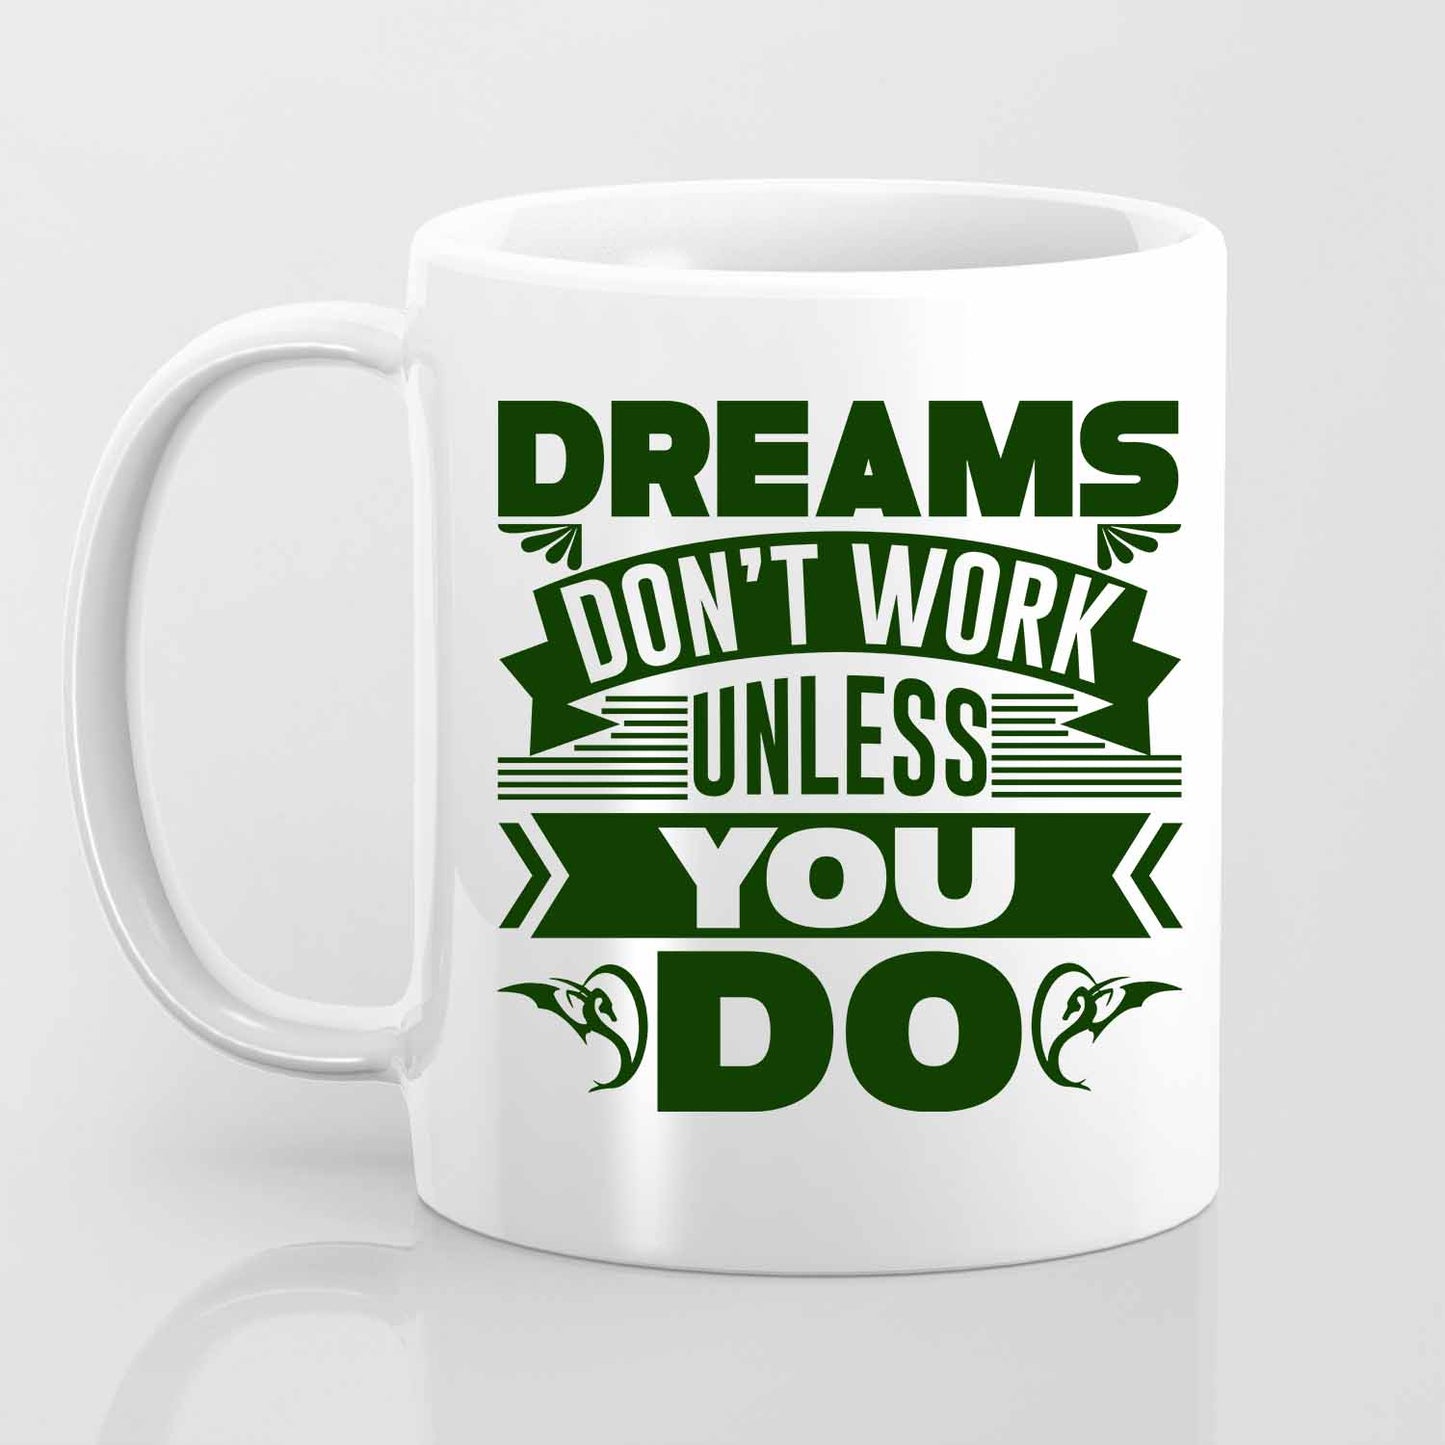 Dreams Don't Work Unless You Do - Mug